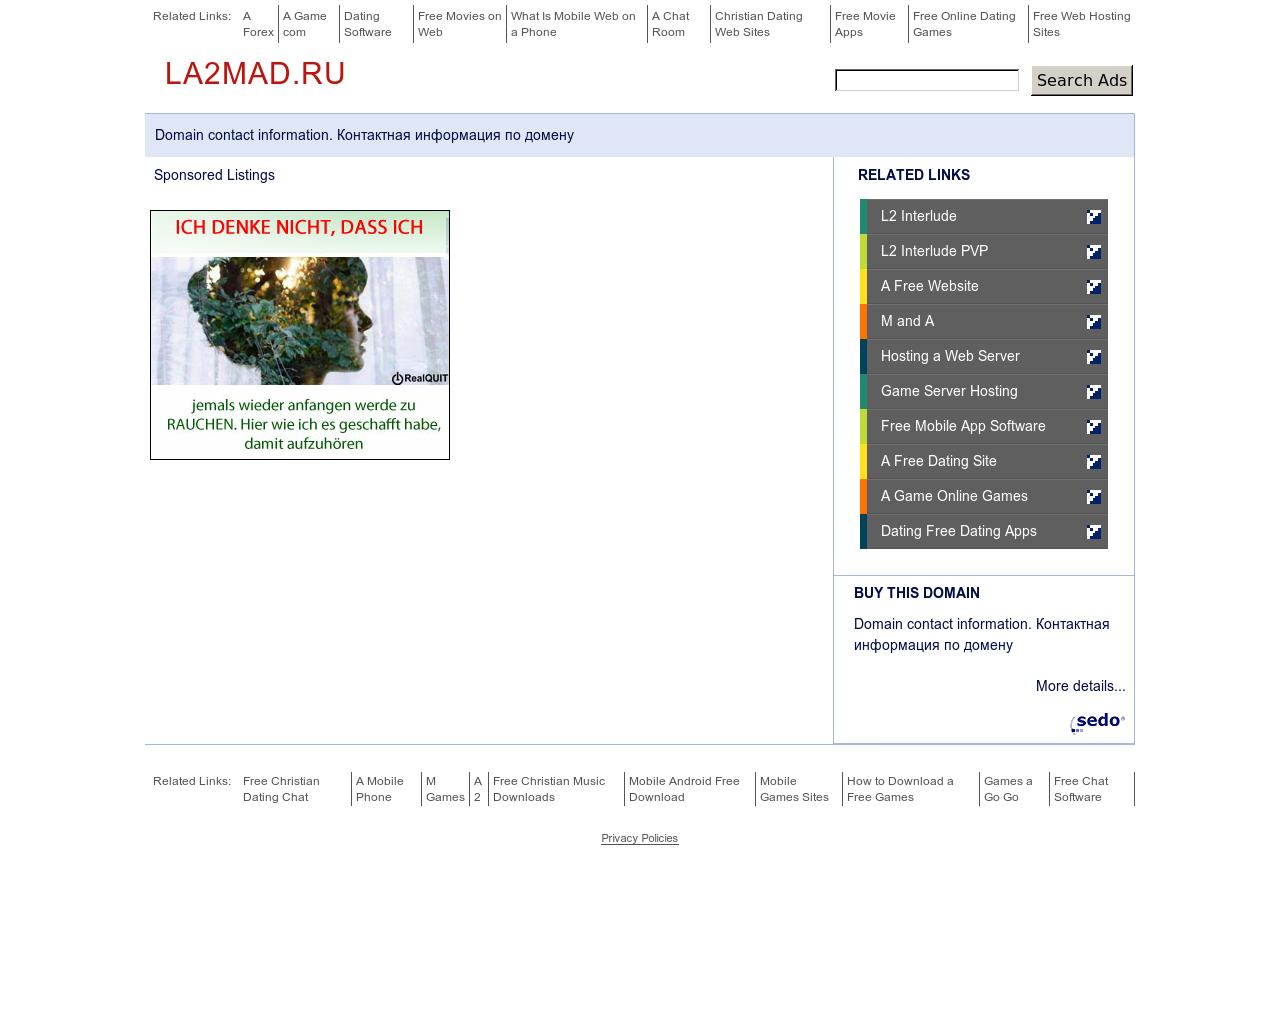 Изображение сайта la2mad.ru в разрешении 1280x1024